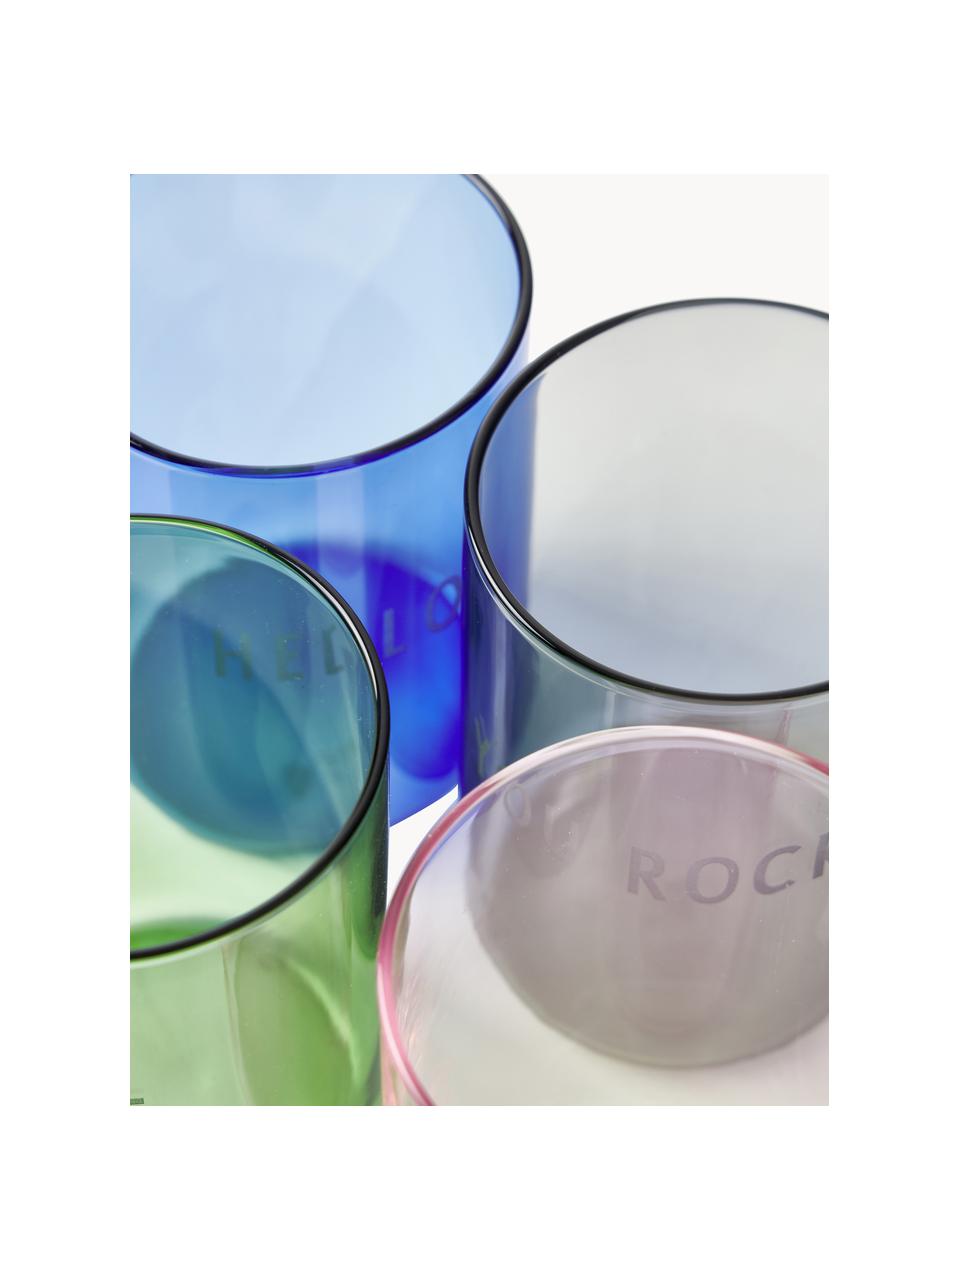 Designer Wasserglas Favourite YOU ROCK mit Schriftzug, Borosilikatglas, Dunkelgrau (You rock), Ø 8 x H 11 cm, 350 ml